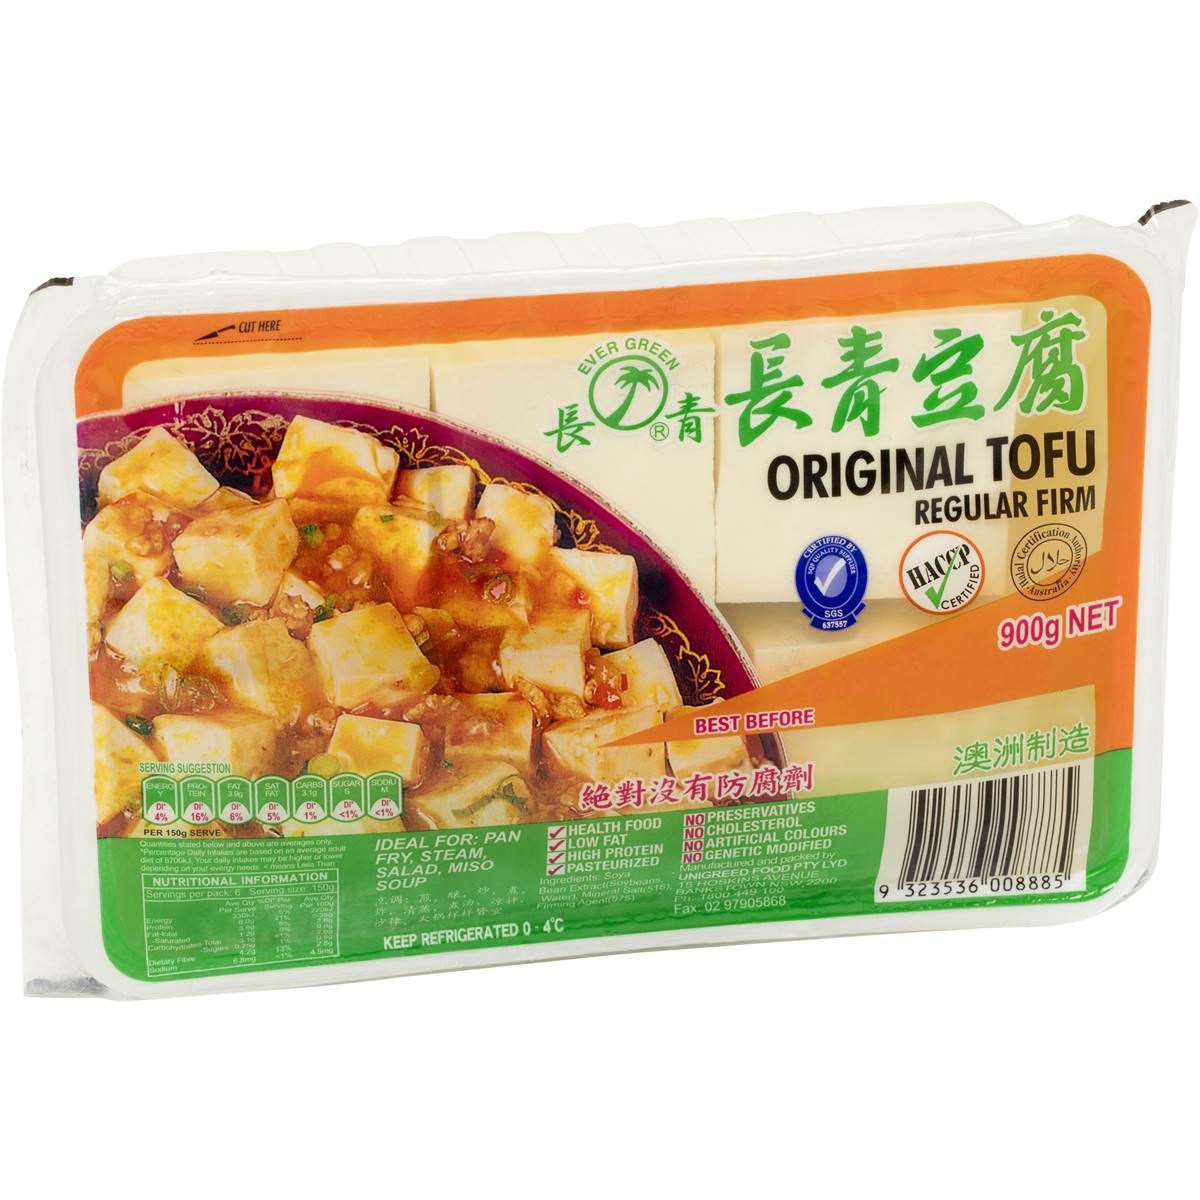 Calories in Evergreen Original Tofu